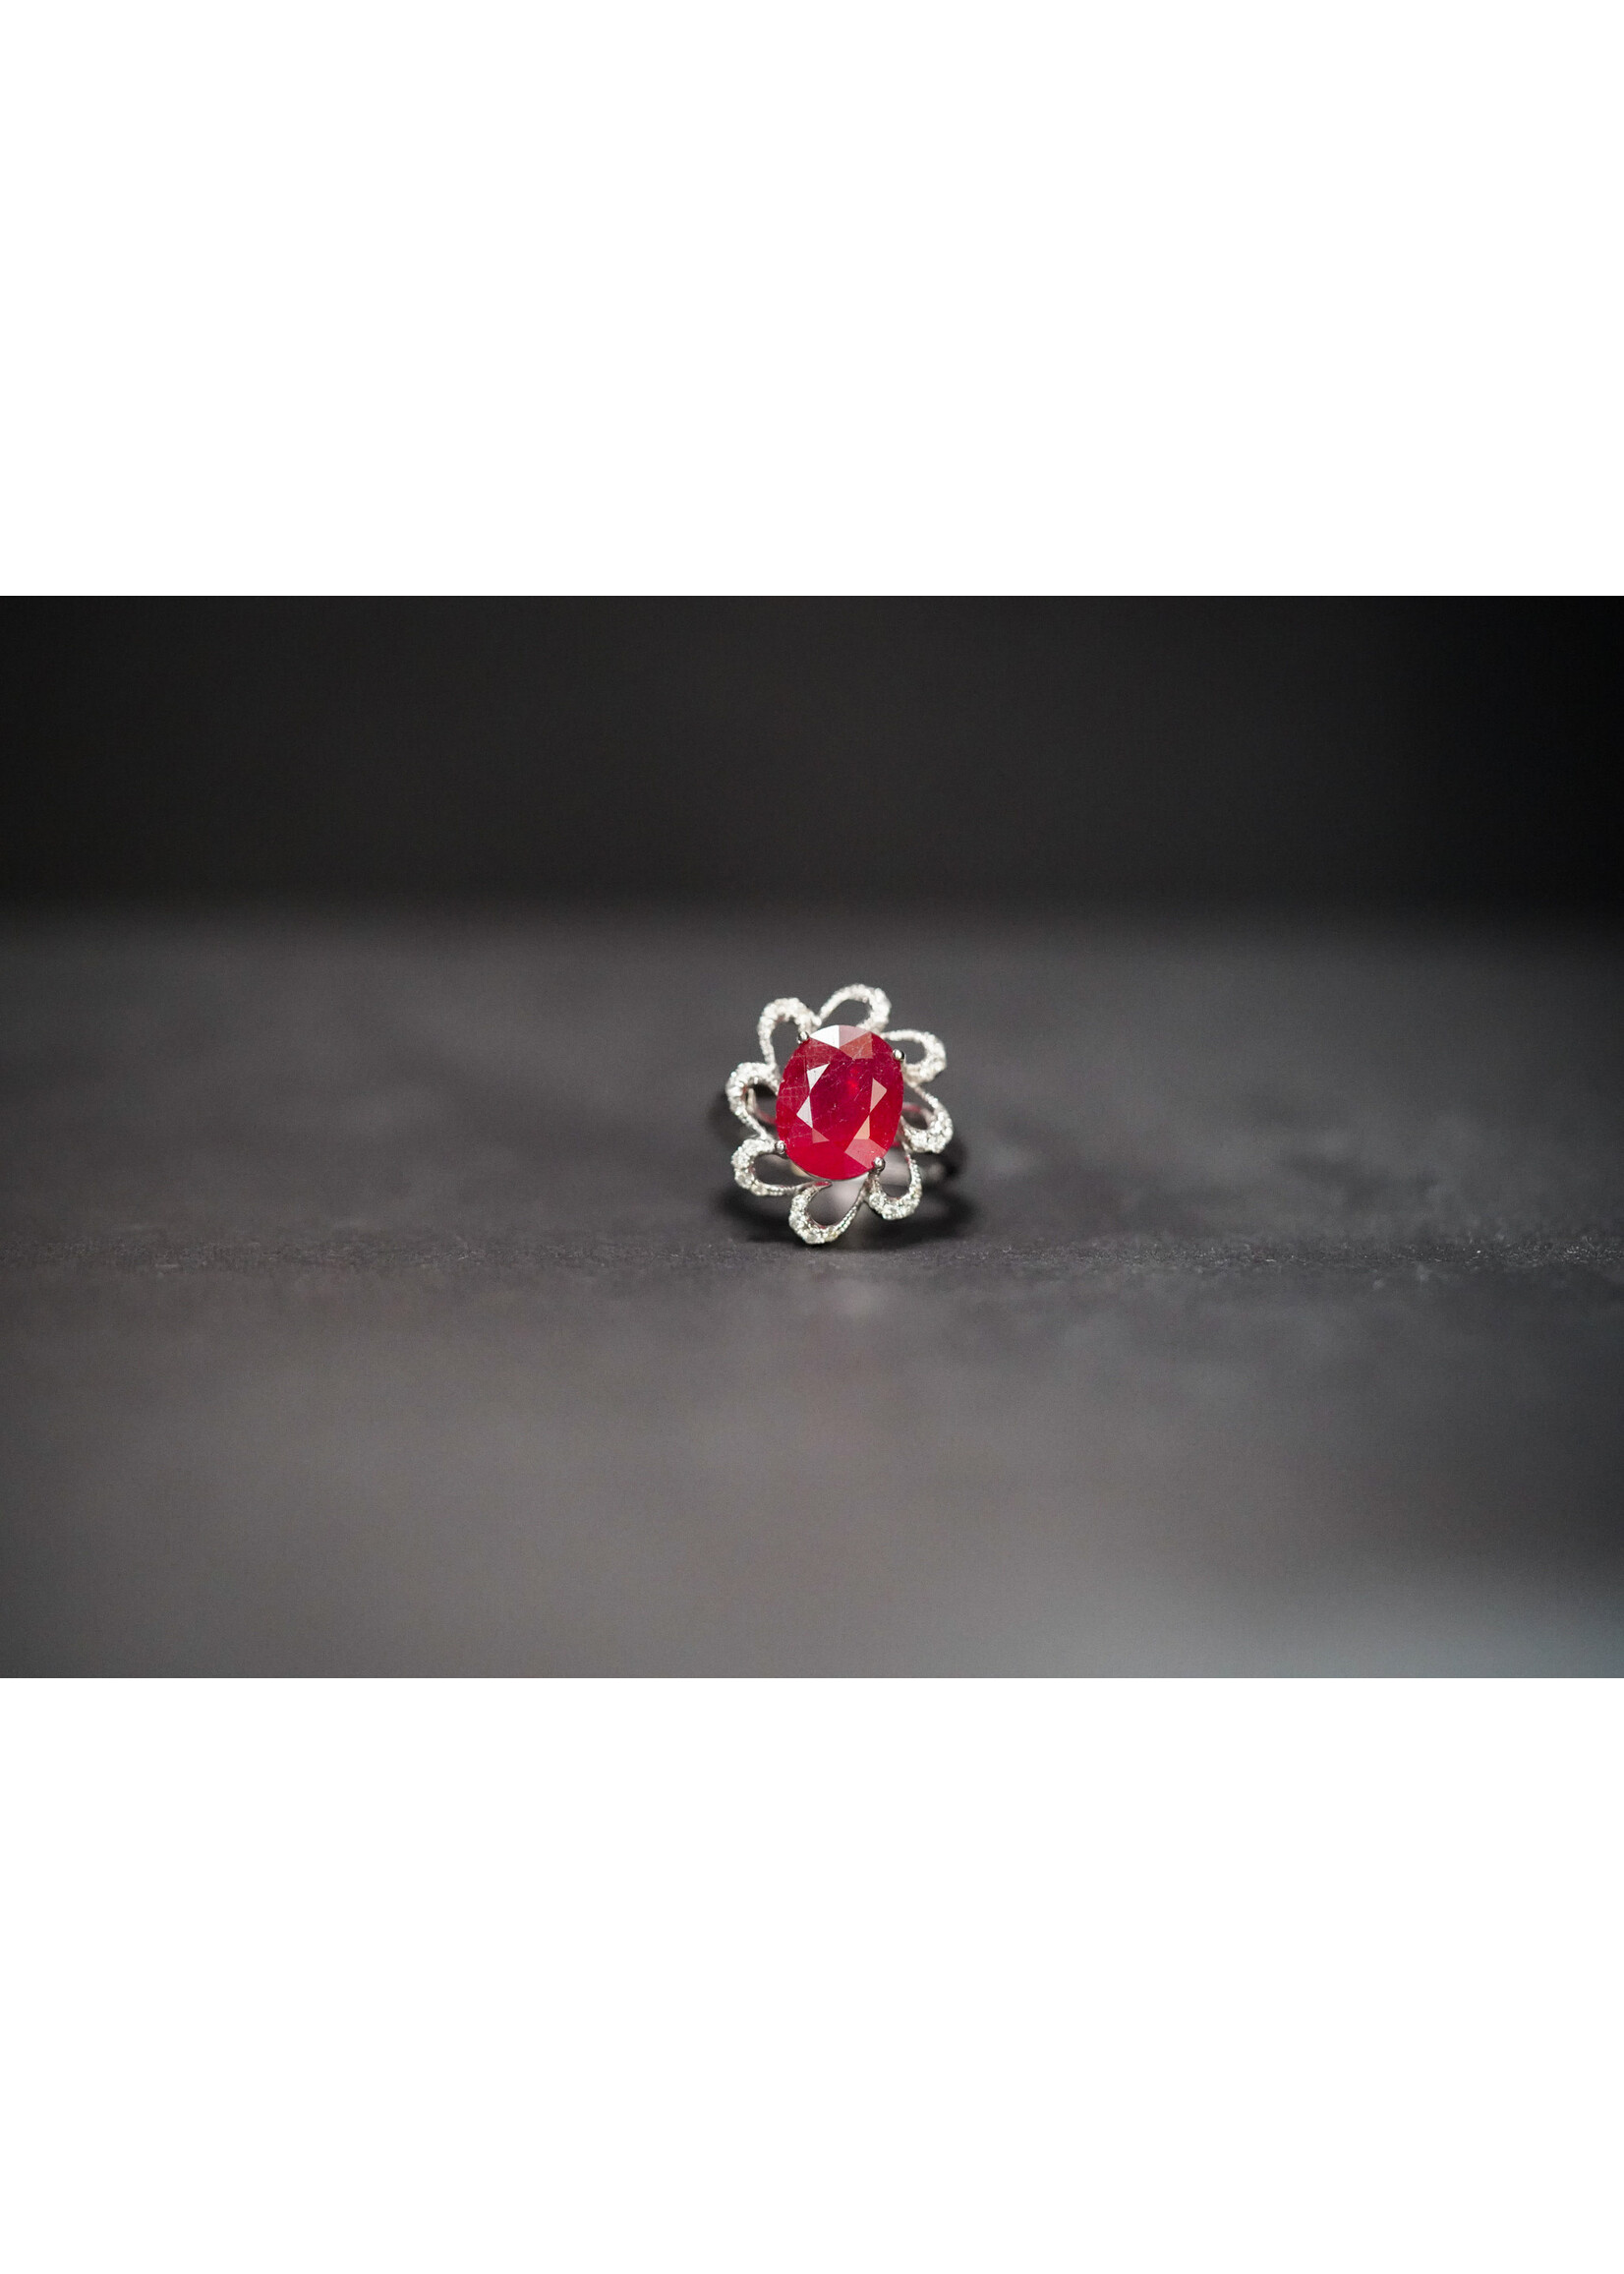 18KW 5.75g 5.88ctw (5.58ctr) Ruby & Diamond Fashion Ring (size 6.5)